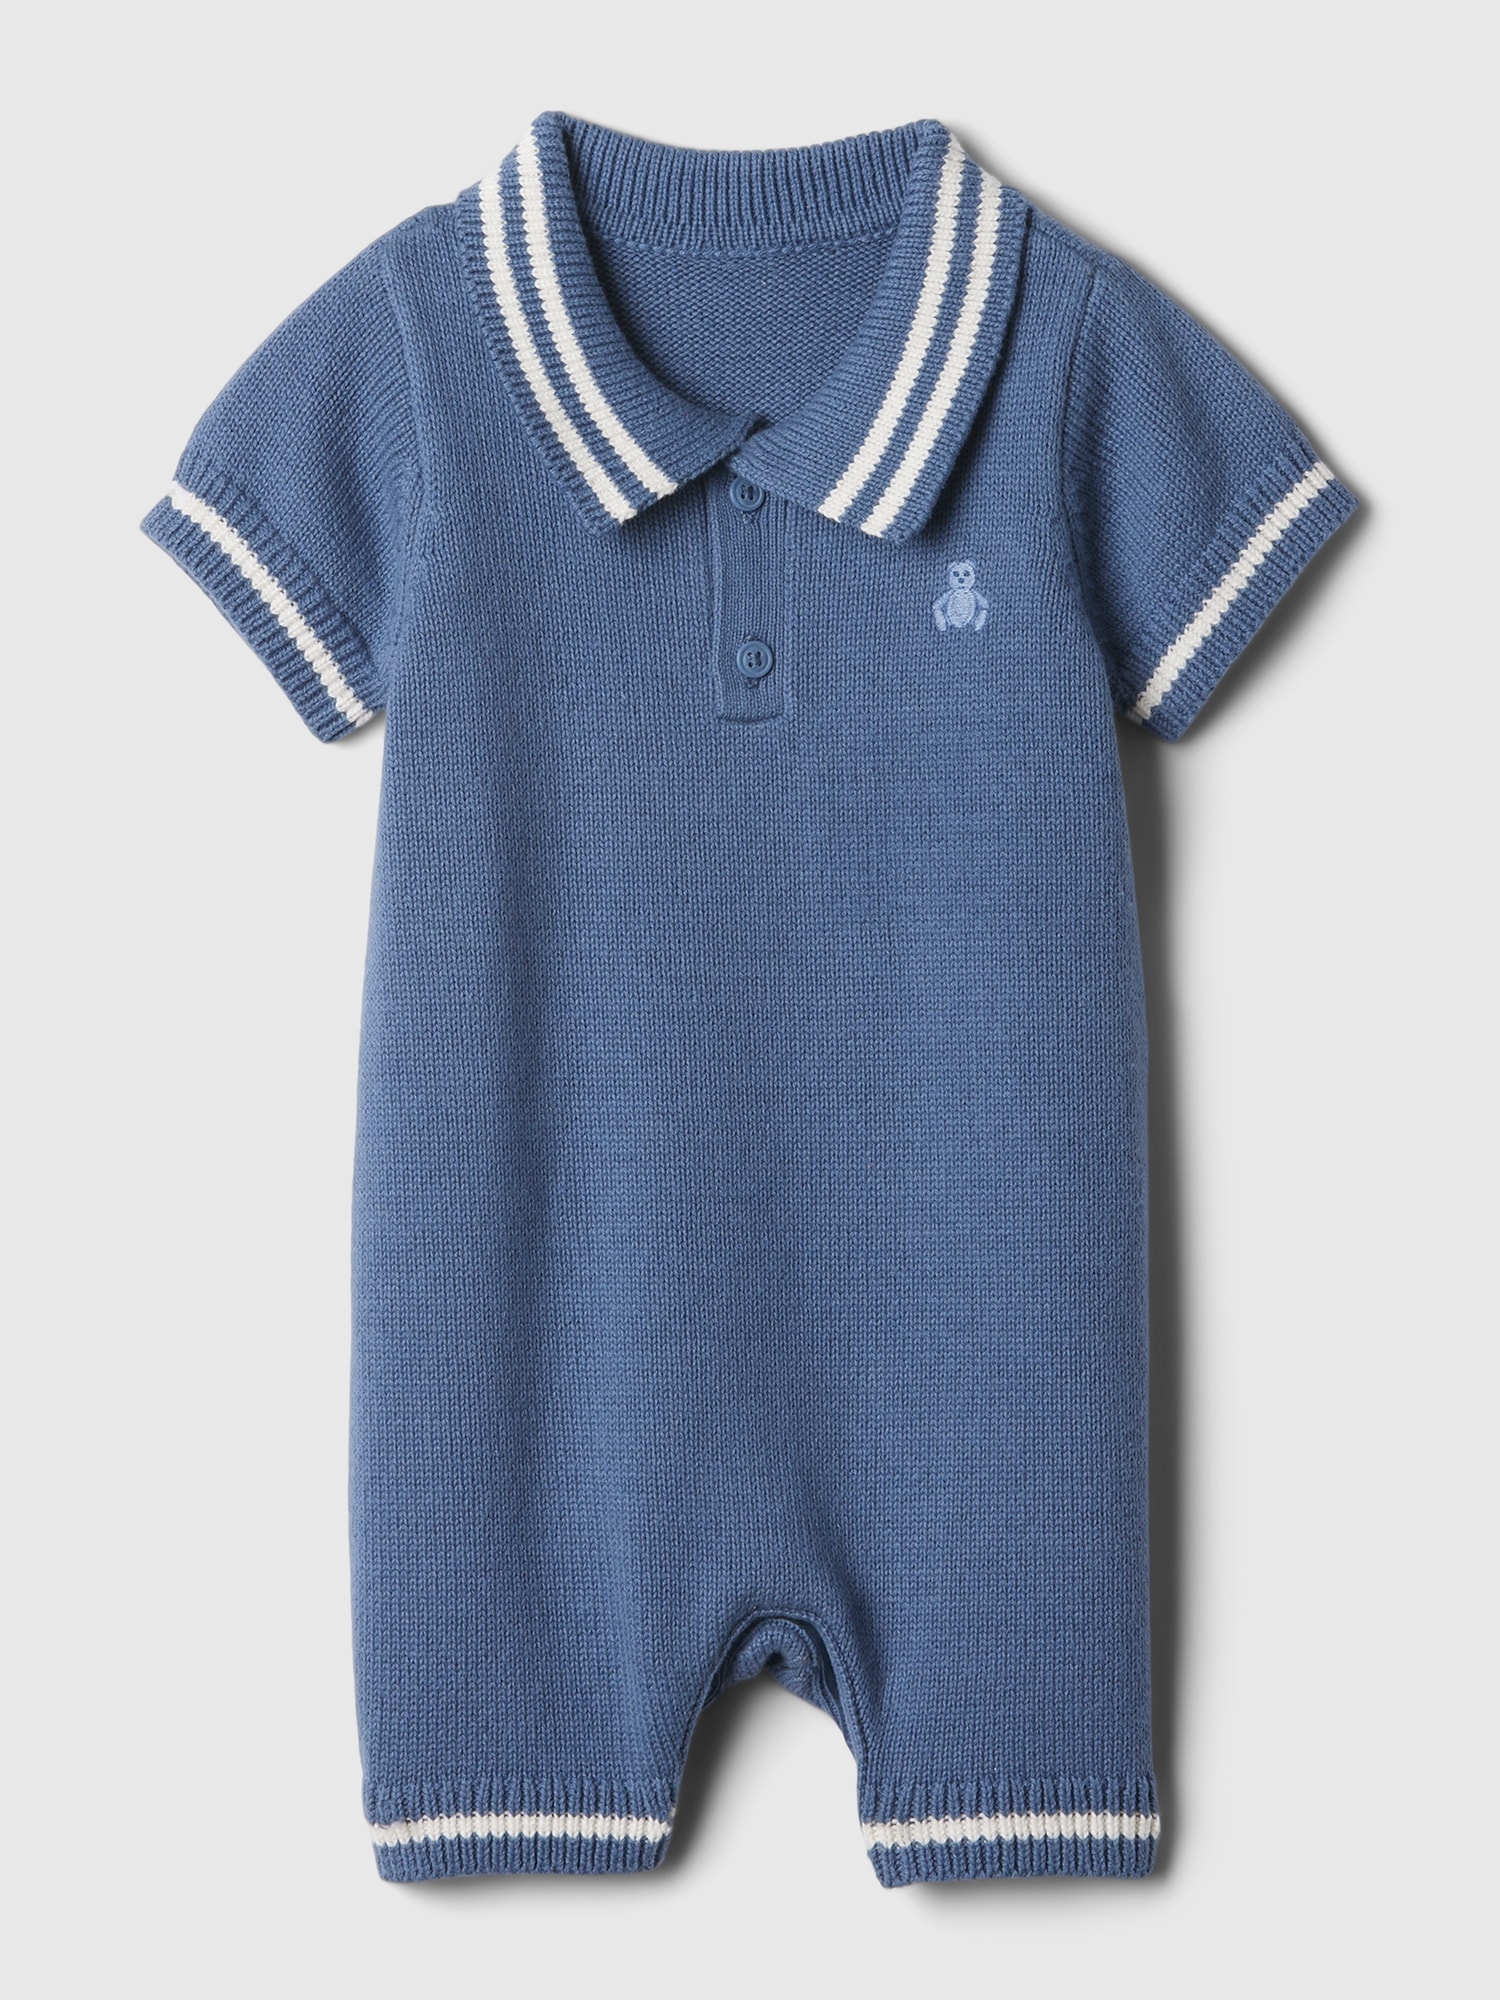 Gap Baby Polo Shirt Sweater Shorty One-piece In Bainbridge Blue